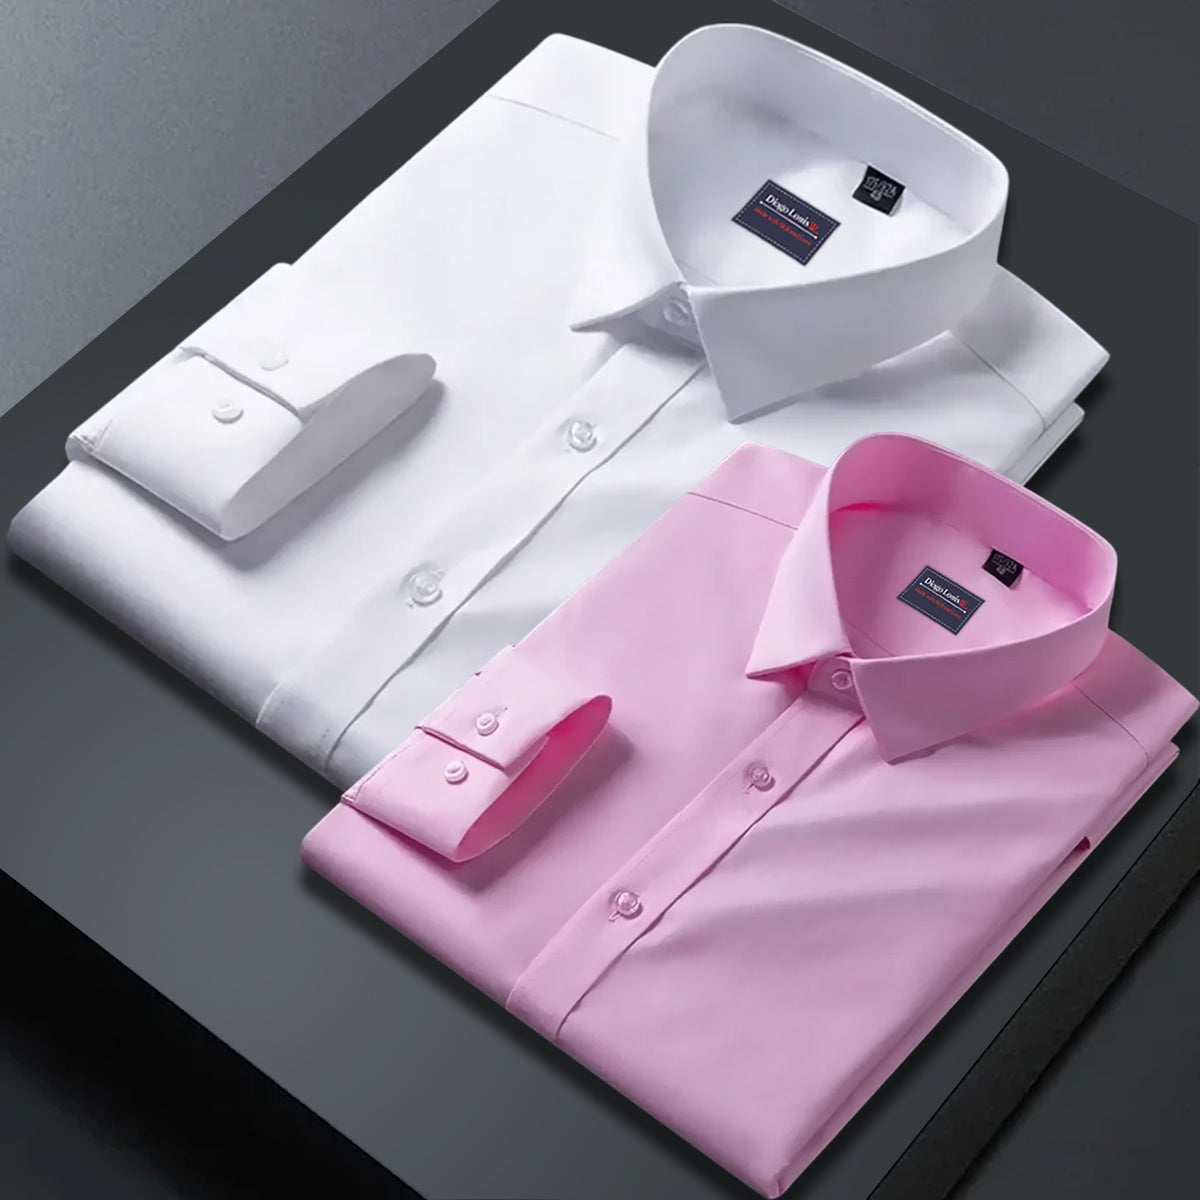 Combo of 2 plain shirts White & Pink Colour